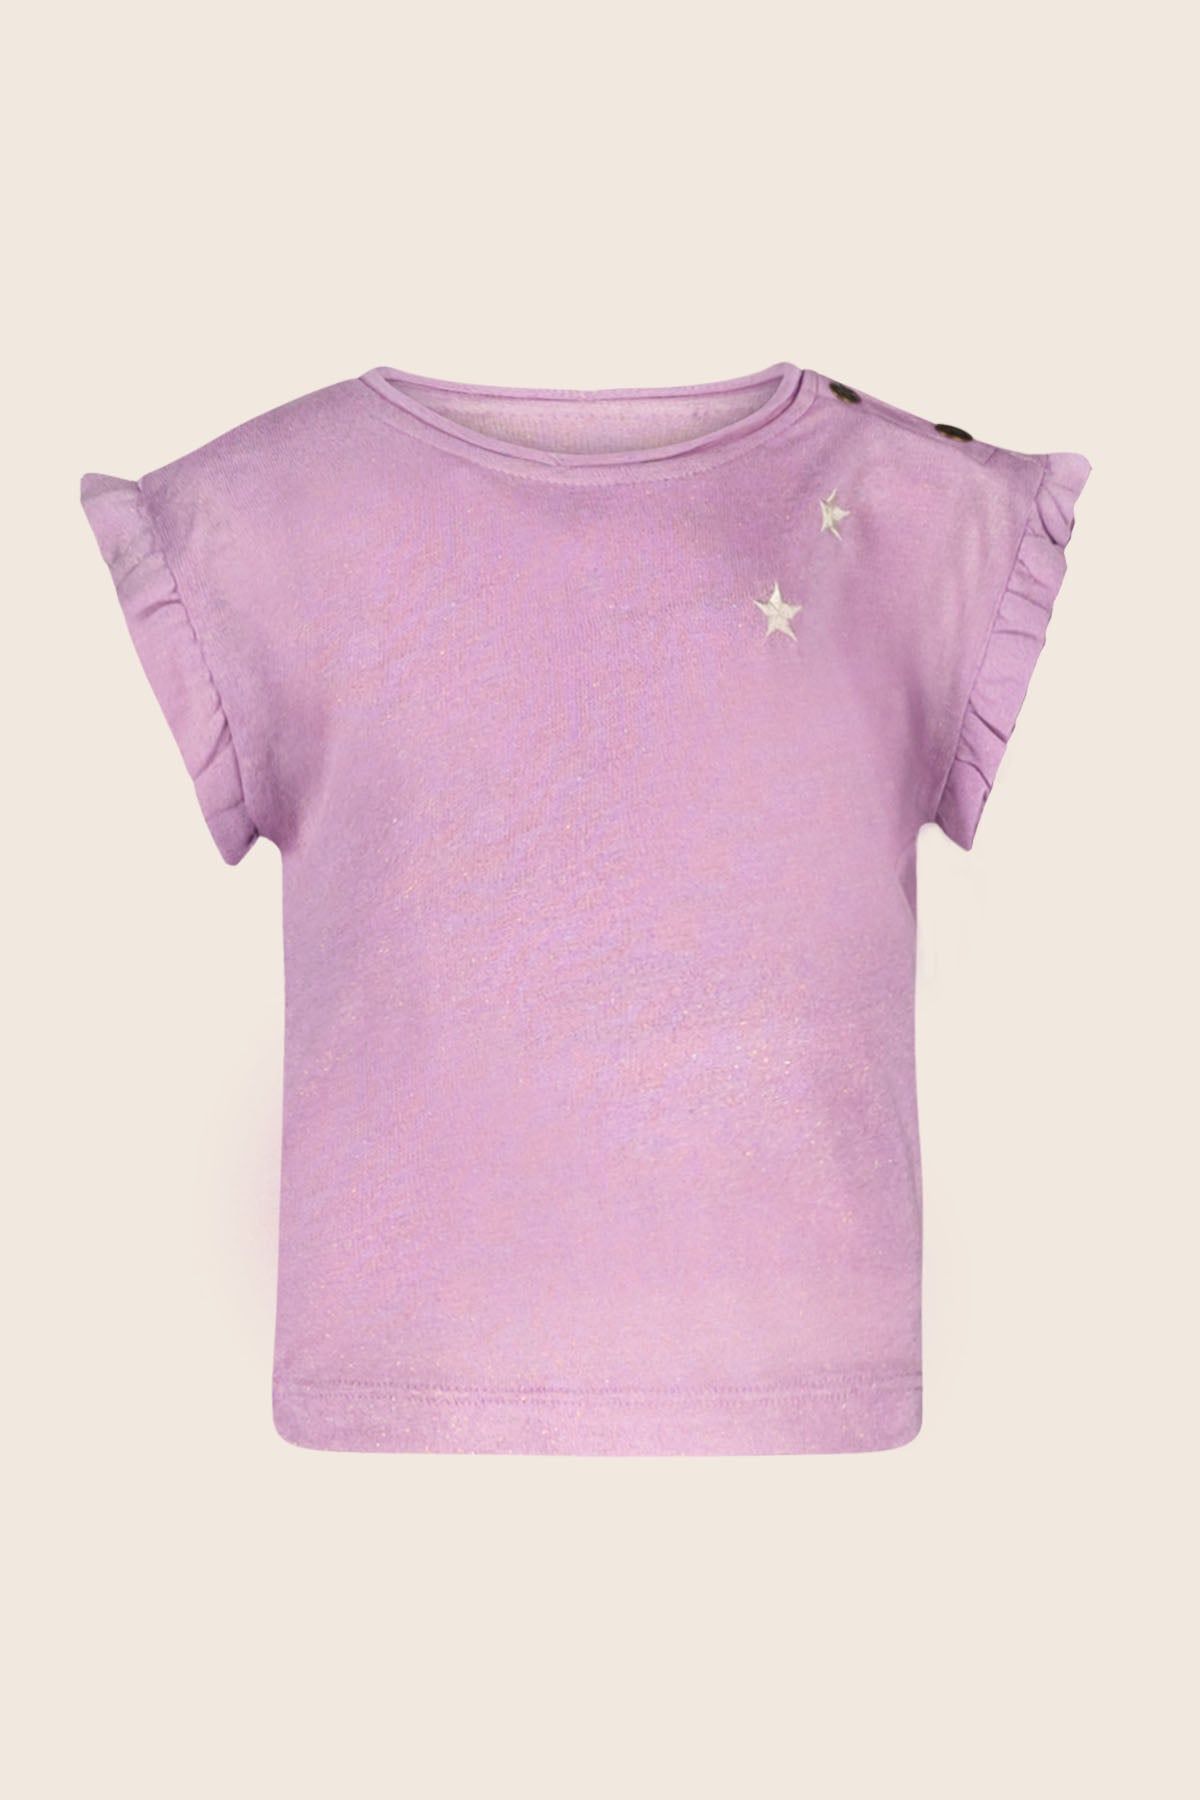 T-Shirt Top GEMMA metallic lilac